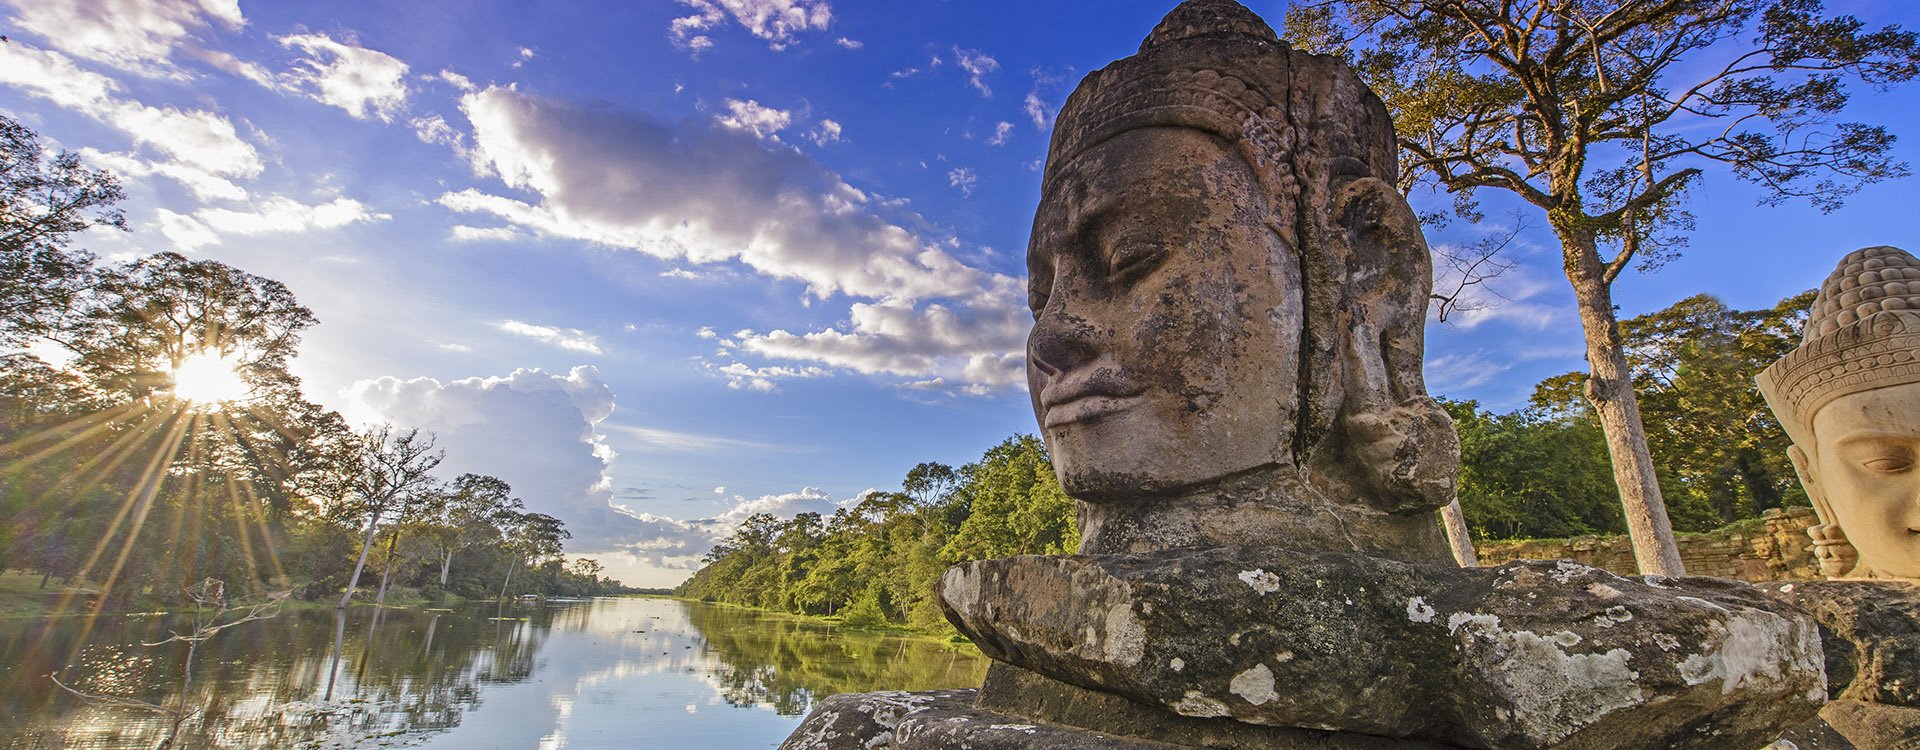 Cambodia, Siem Reap, Angkor Thom entrance, statues on bridge